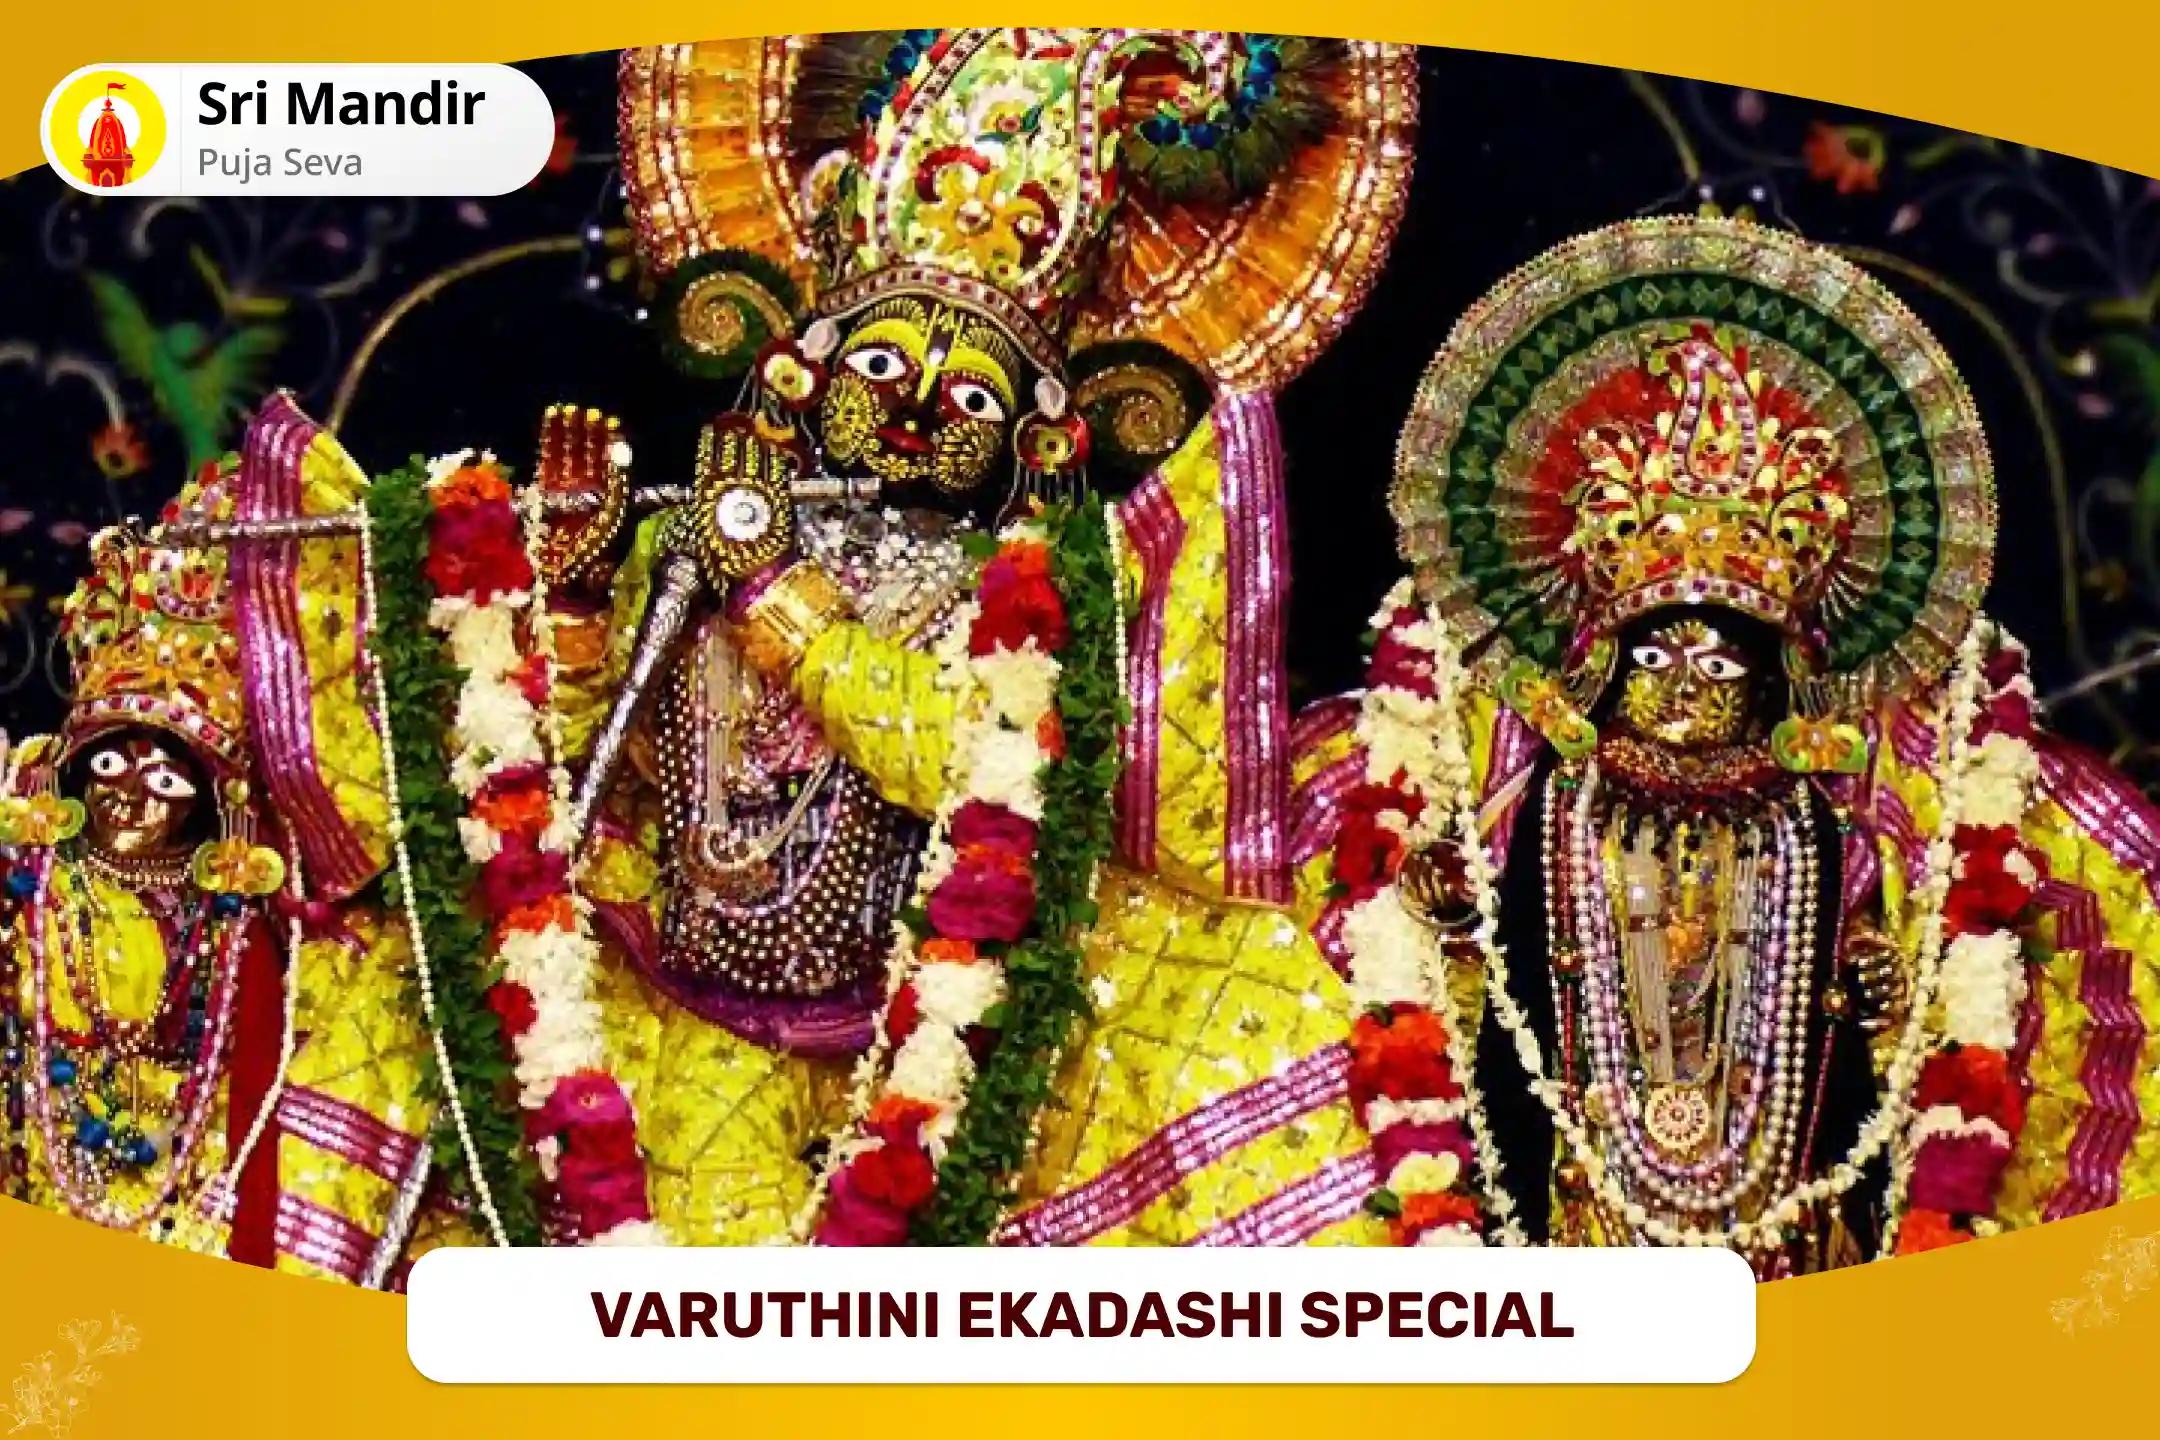 Varuthini Ekadashi Vrat Katha, Govinda Damodaram Stotra Path and Vrindavan Gau Seva for Good Health, Wealth and Prosperity